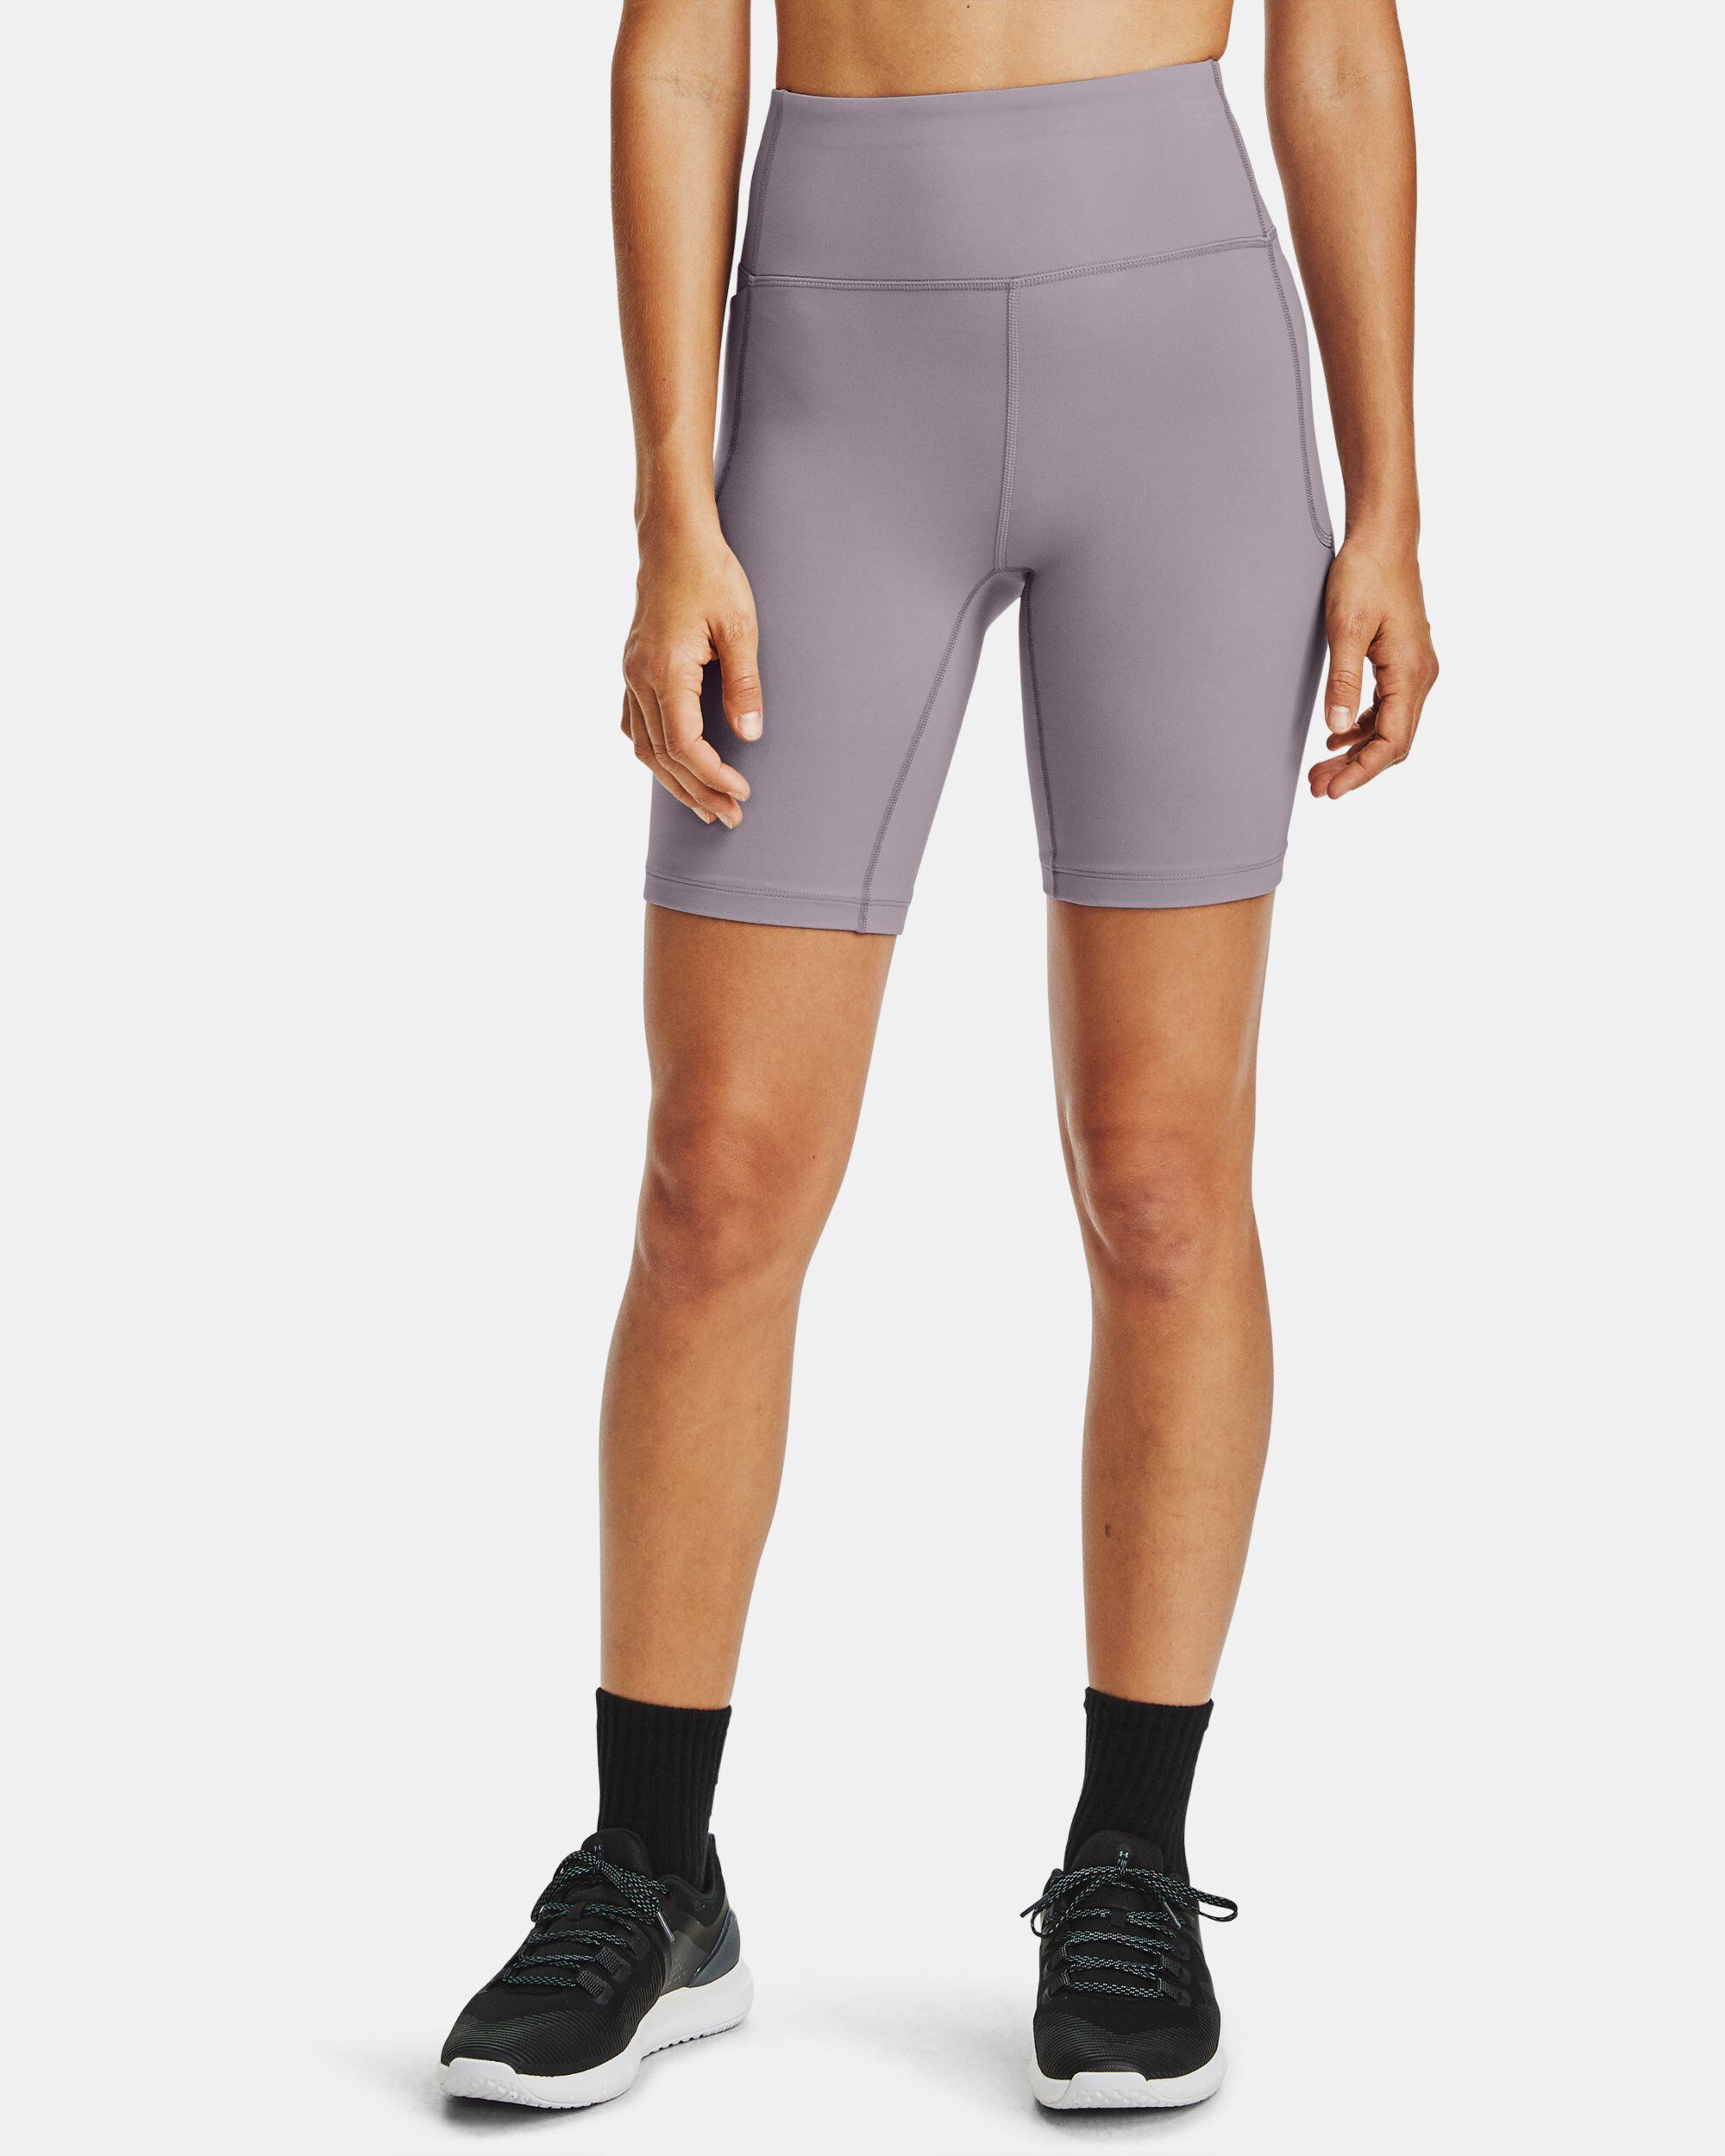 Under Armour Heatgear Armour Bike Shorts - Shorts Women's